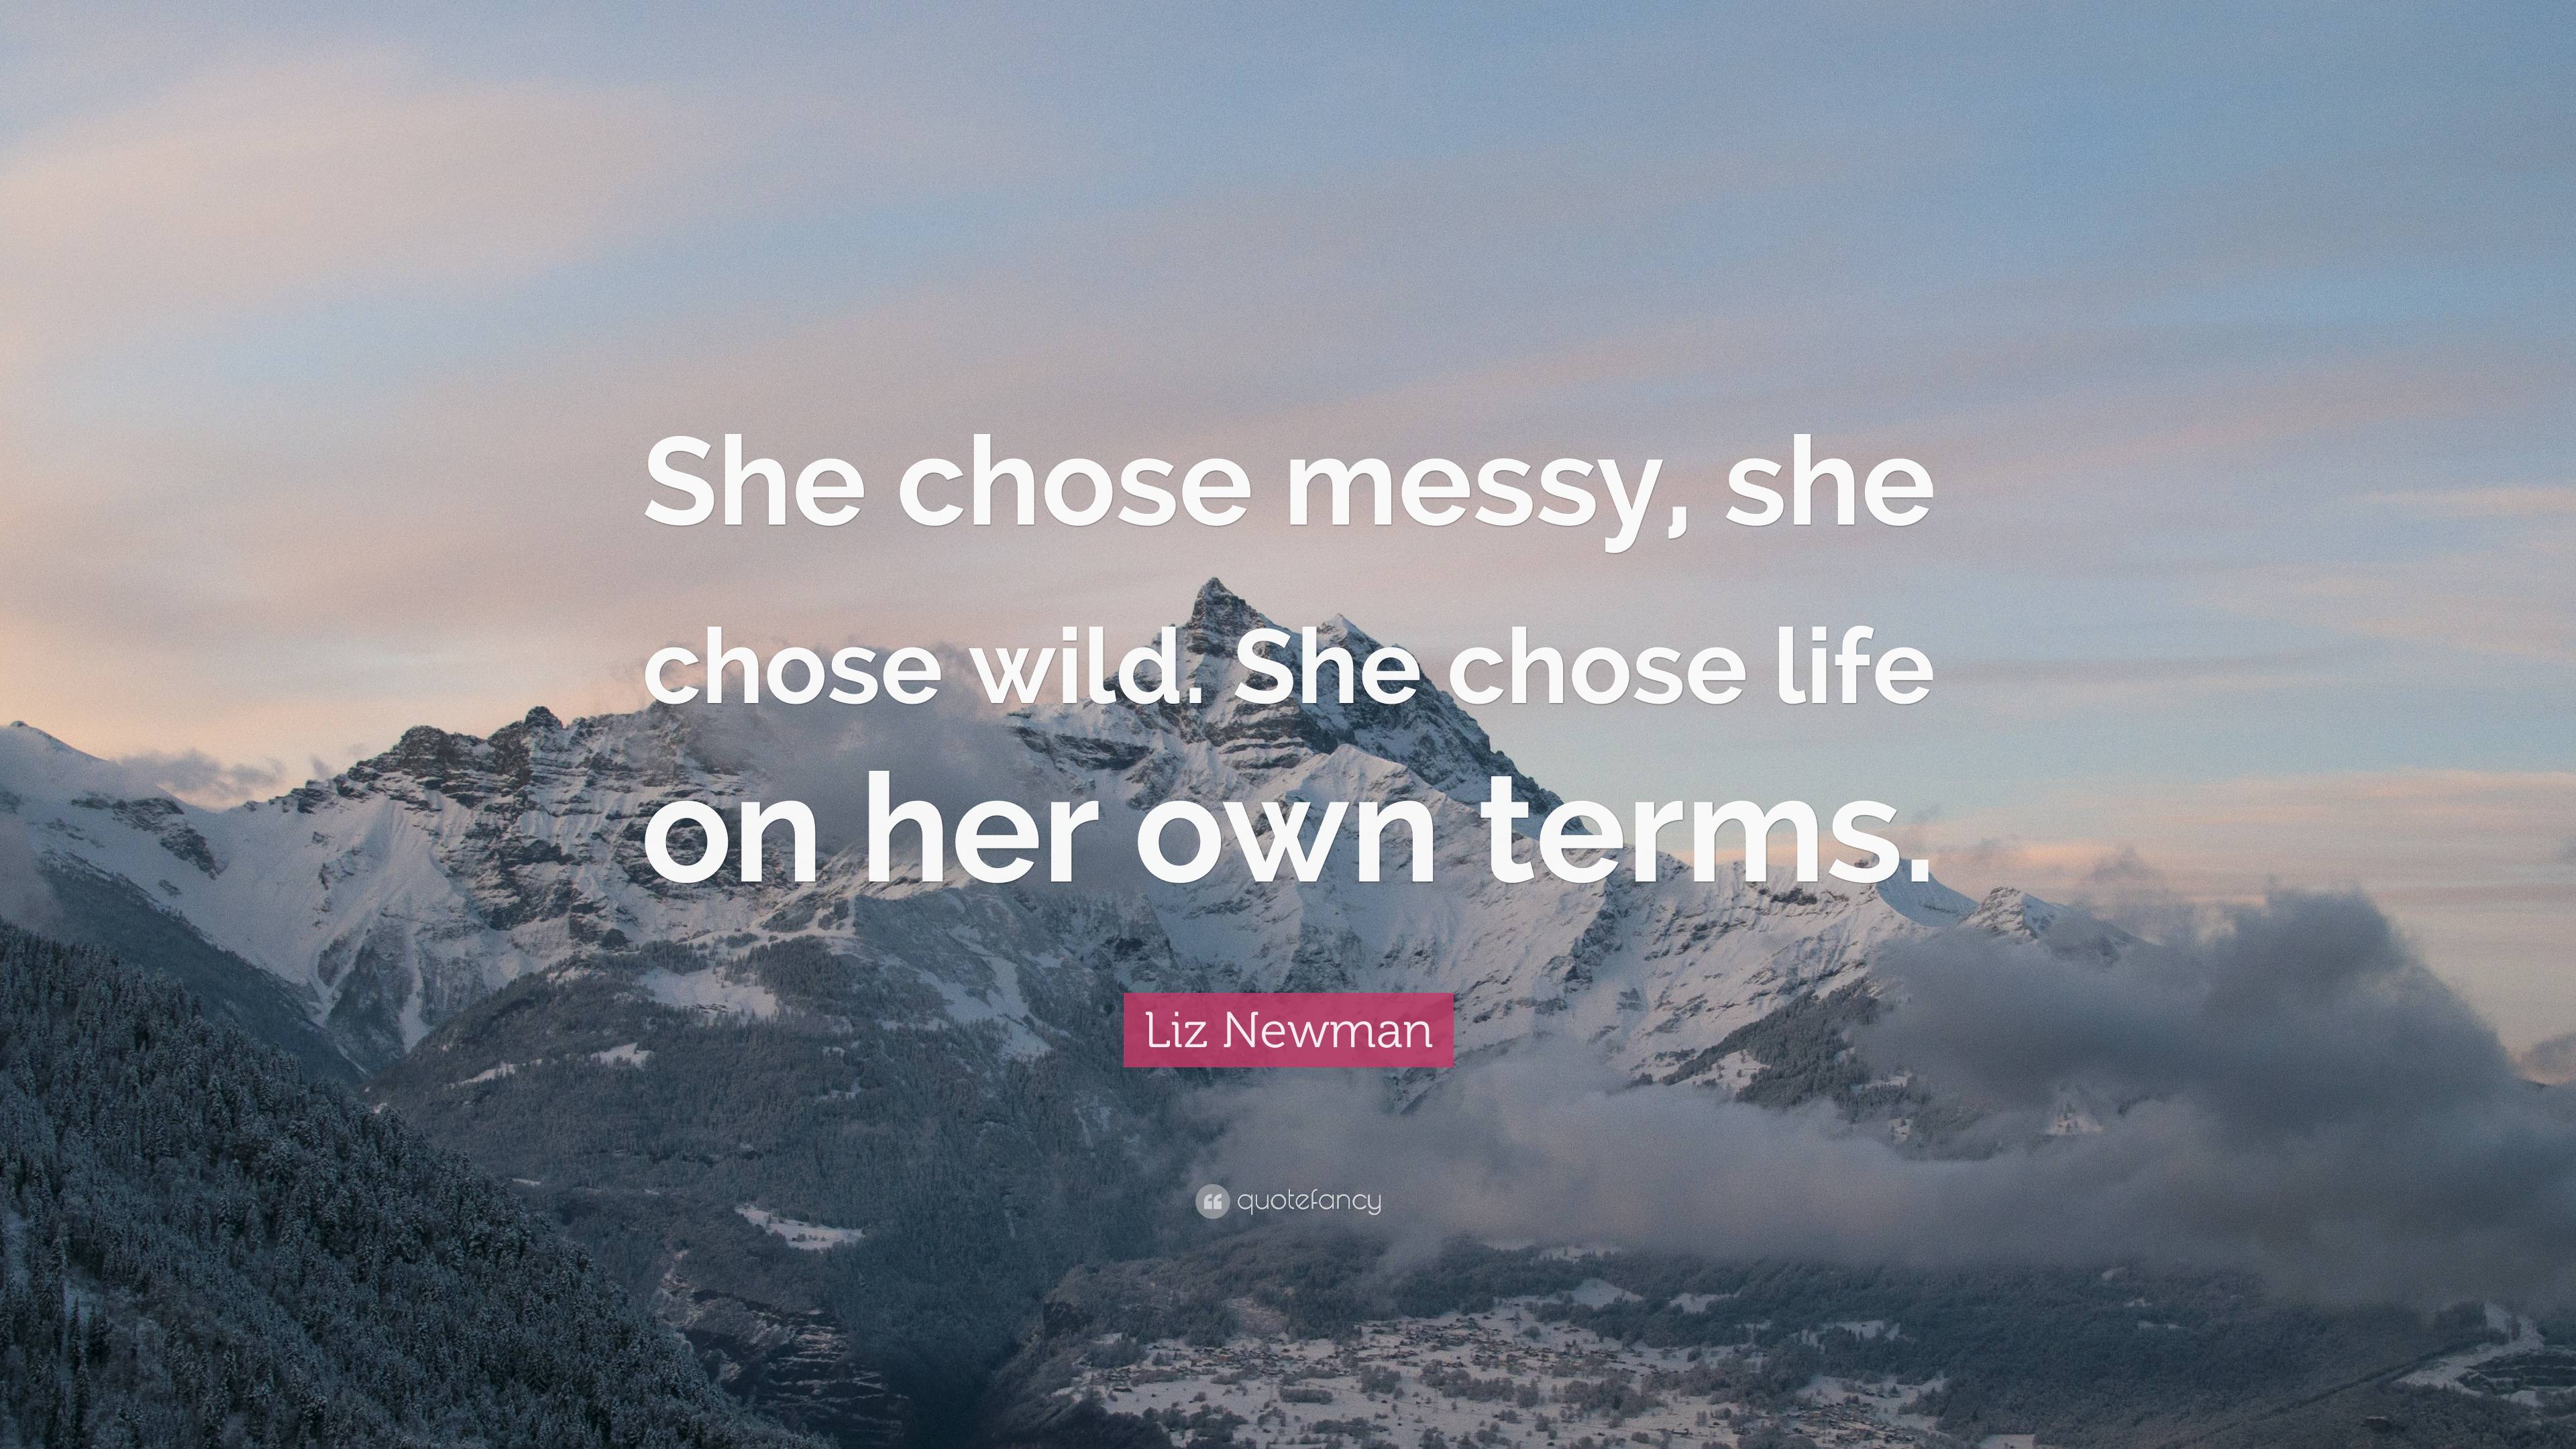 Liz Newman Quote: “She chose messy, she chose wild. She chose life on ...